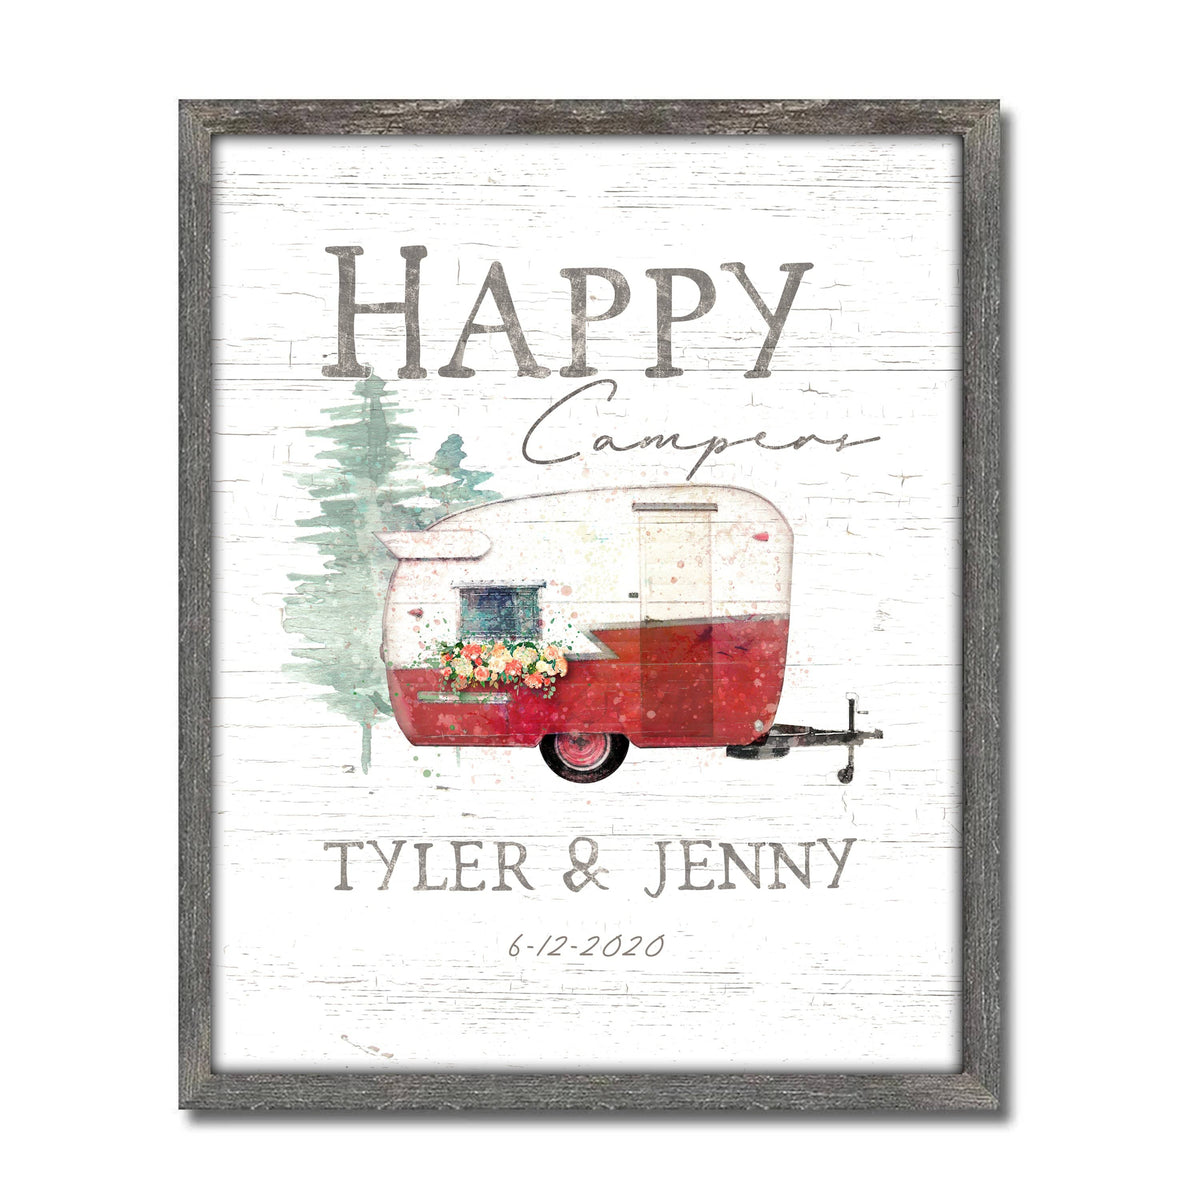 Wall Art Print Happy camper, Gifts & Merchandise